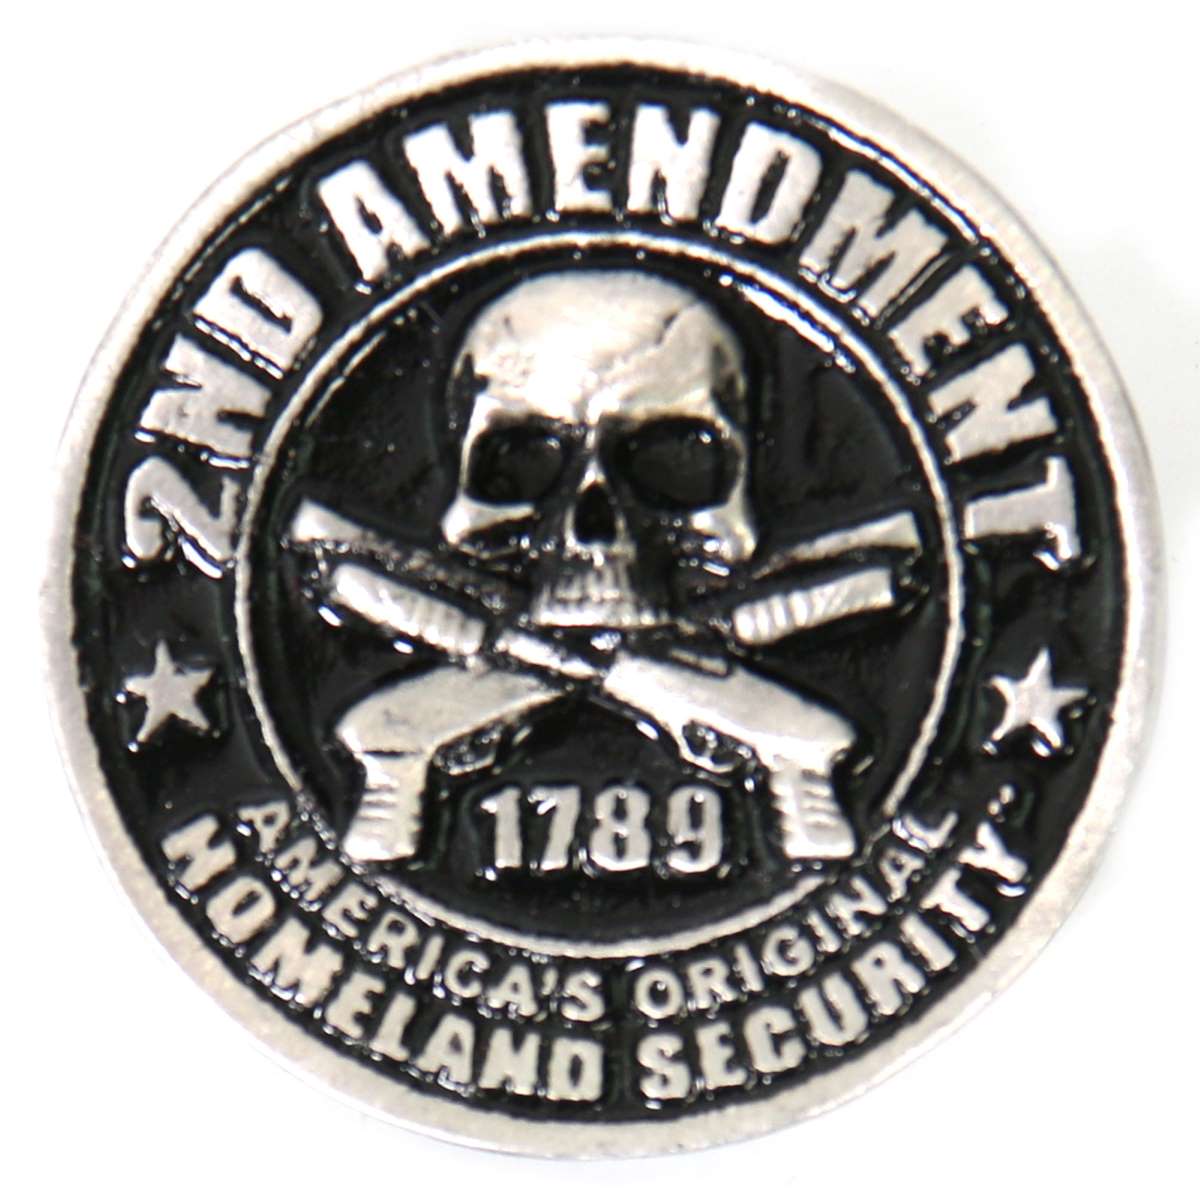 Hot Leathers 2nd Amendment America's Original Homeland Security Pin PNA1197